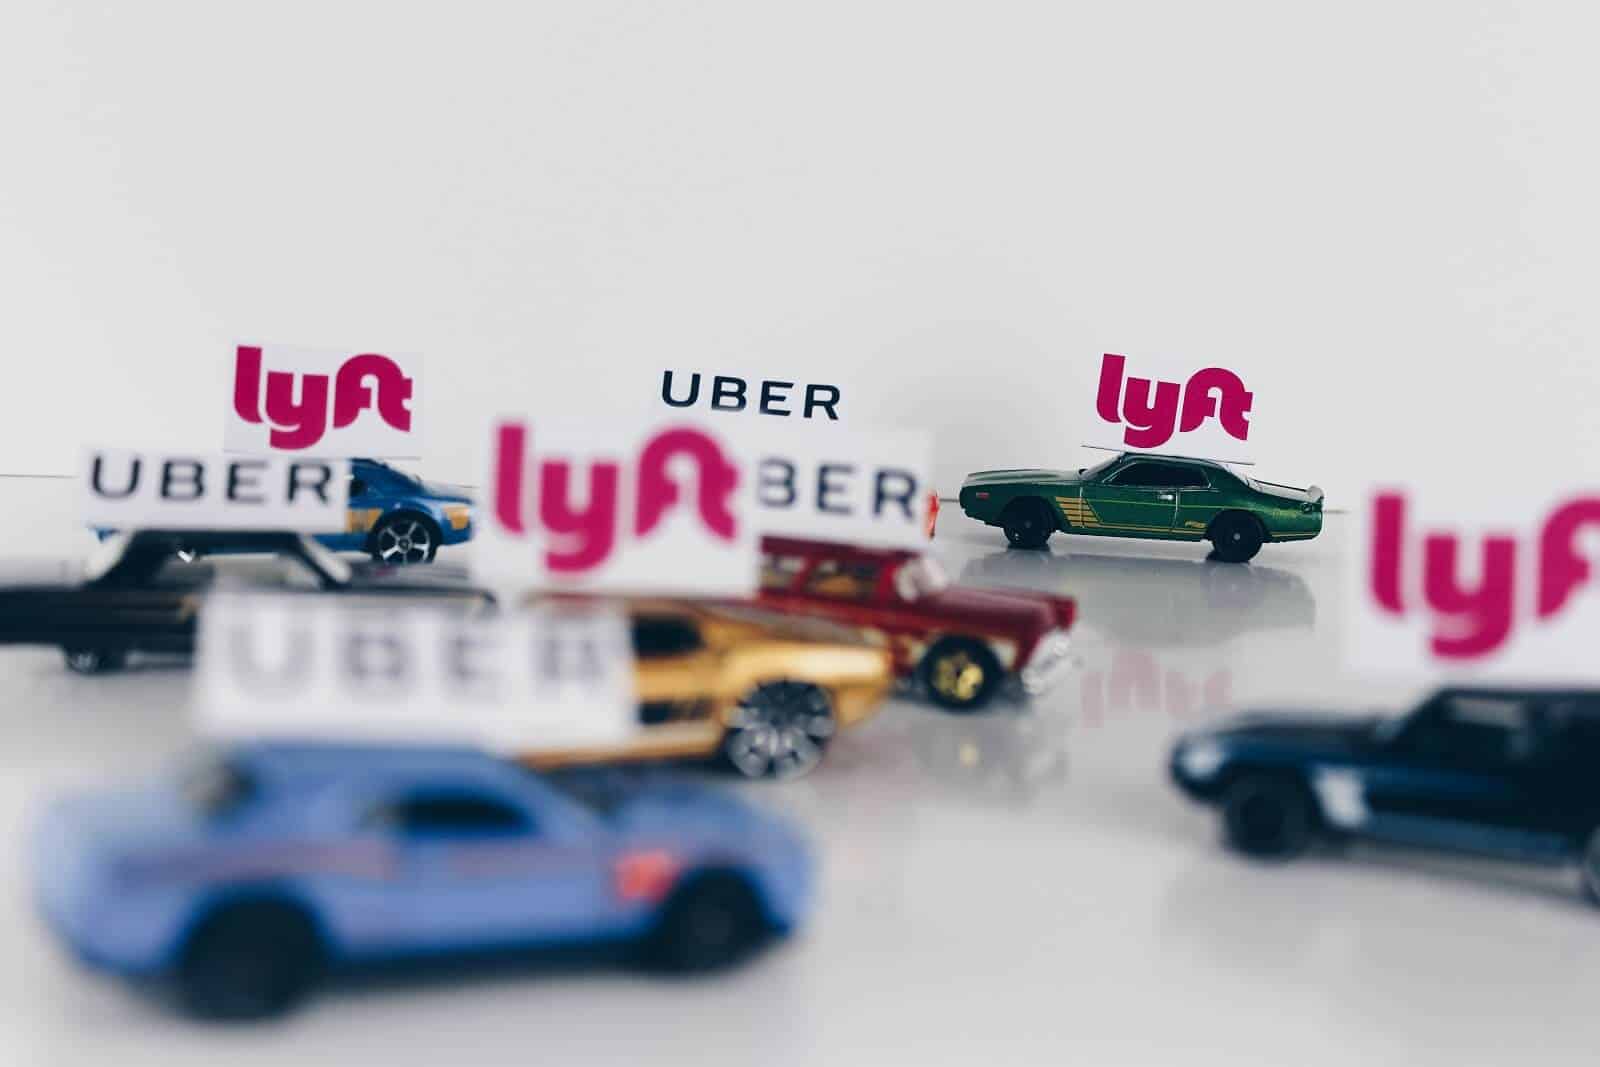 Miniature Uber and Lyft cars